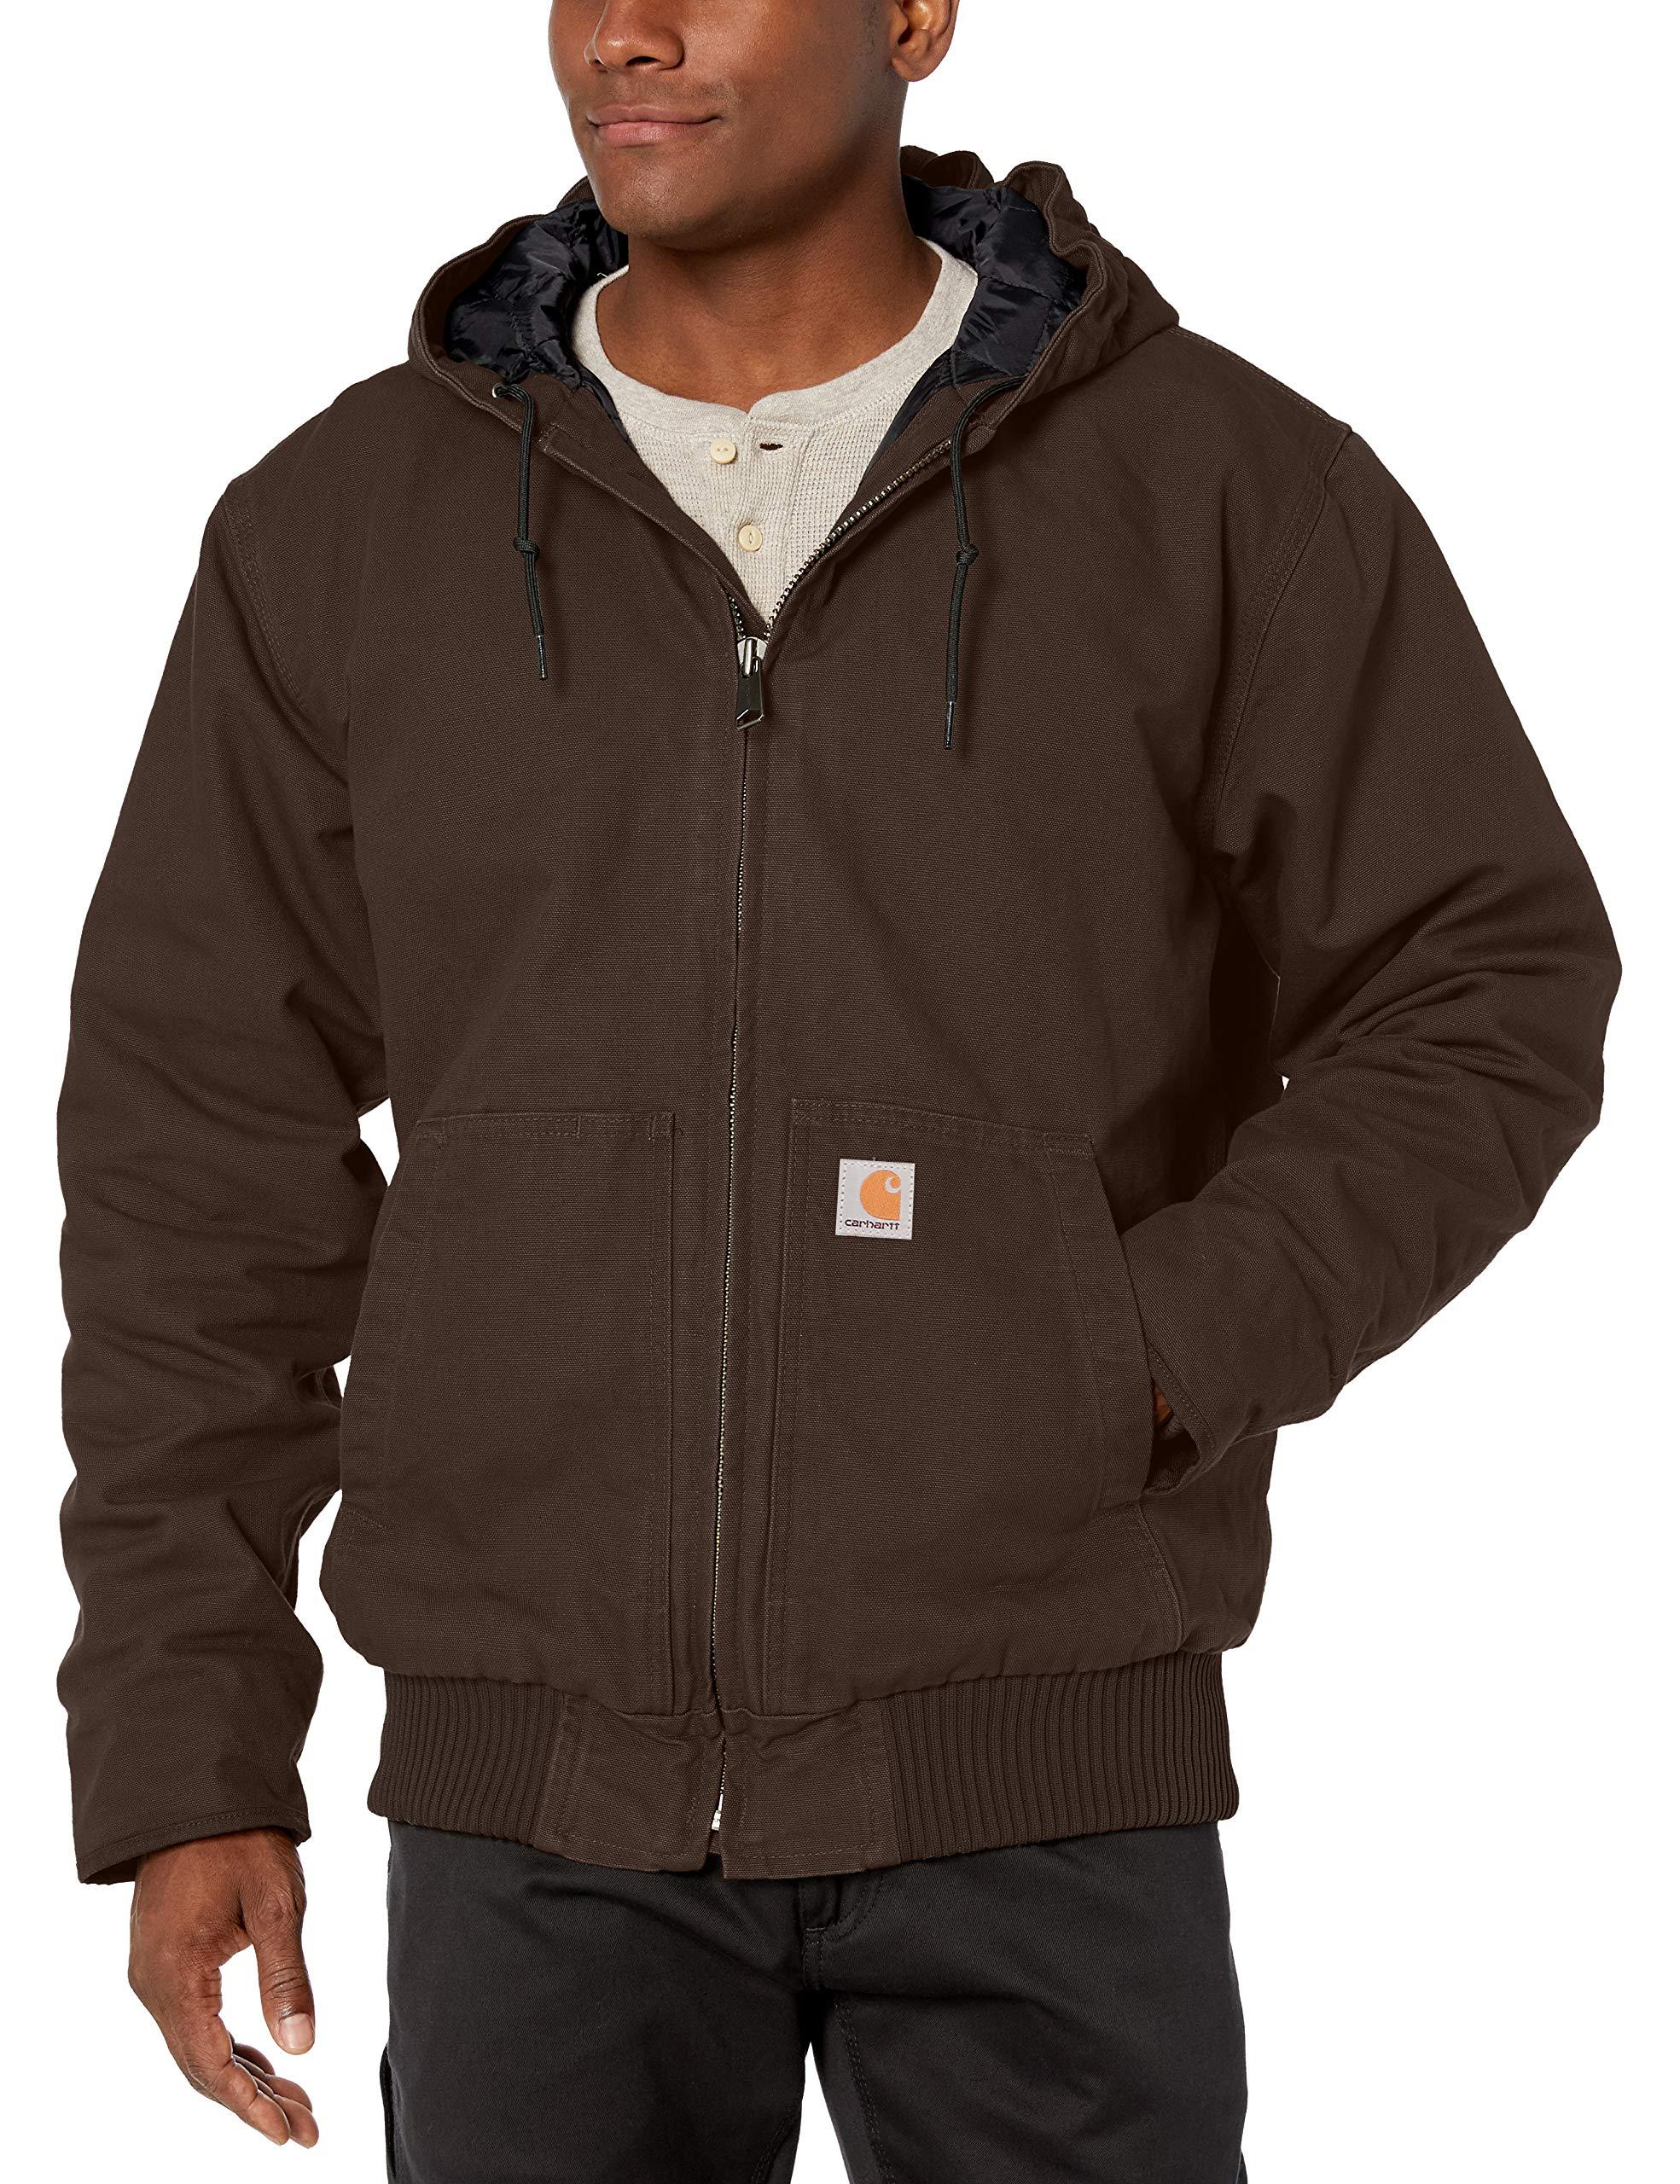 Carhartt Cotton Active Jacket J130 in Dark Brown (Brown) for Men - Lyst